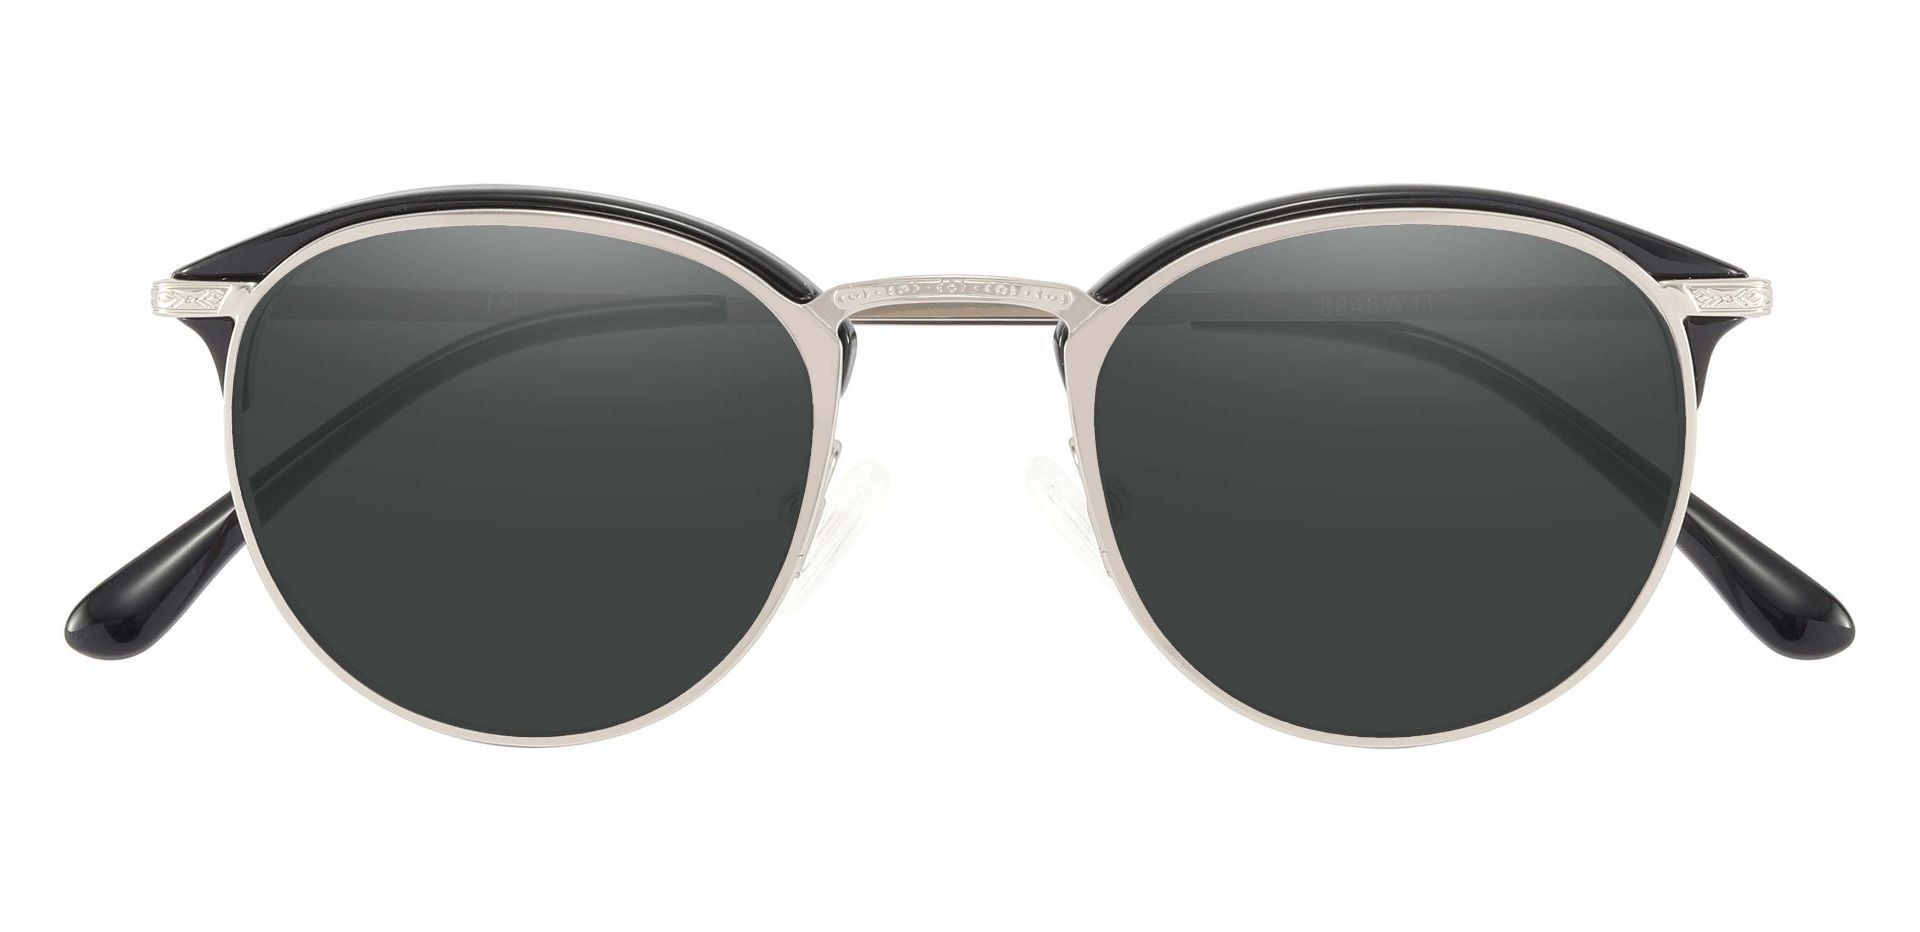 Shultz Browline Progressive Sunglasses - Silver Frame With Gray Lenses